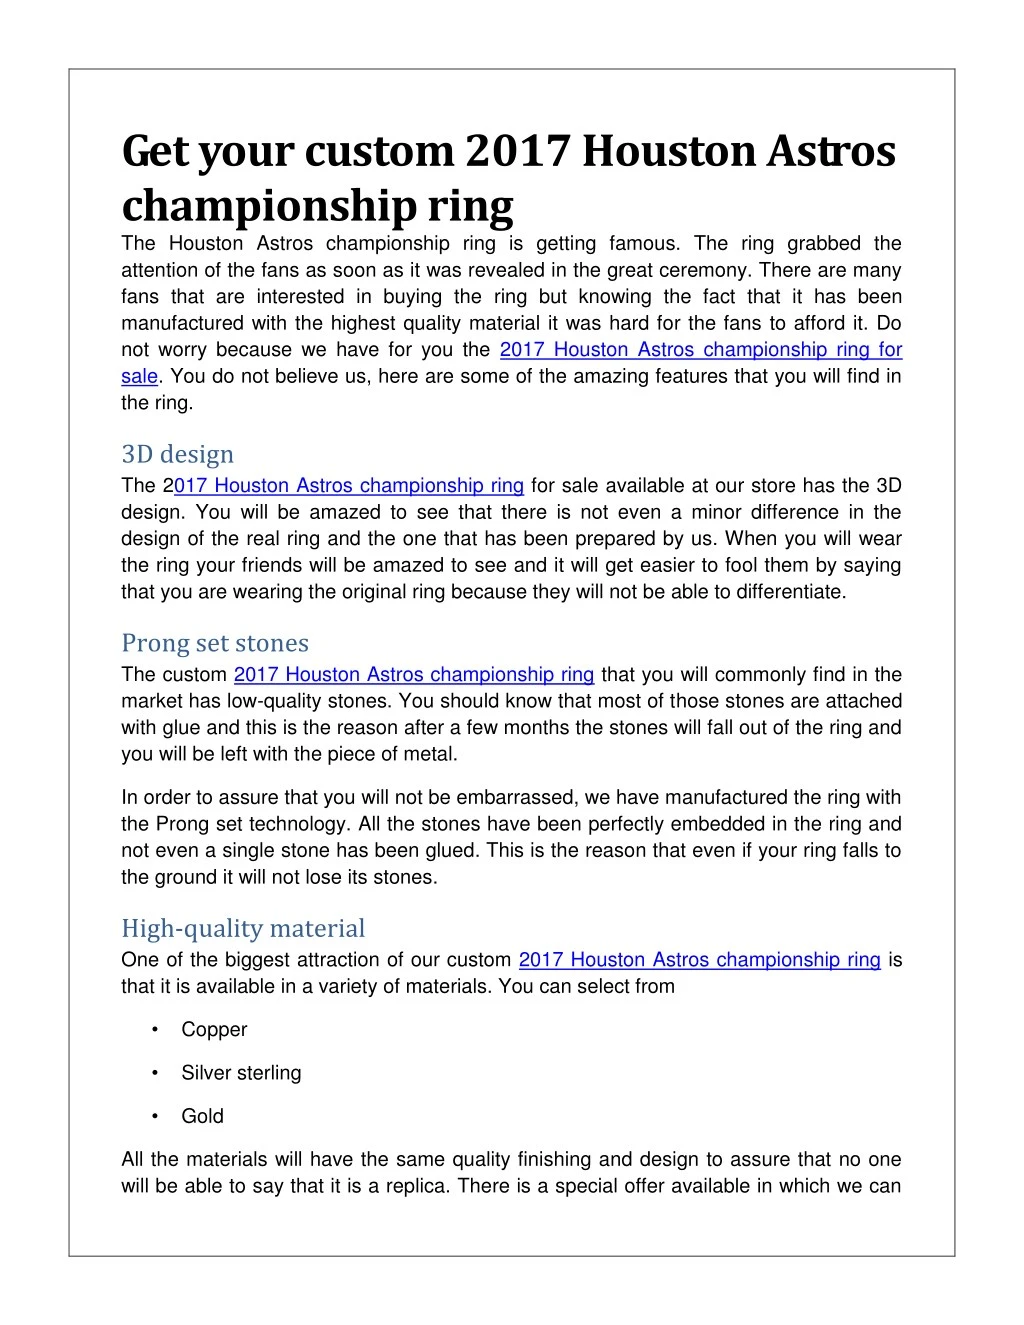 get your custom 2017 houston astros championship